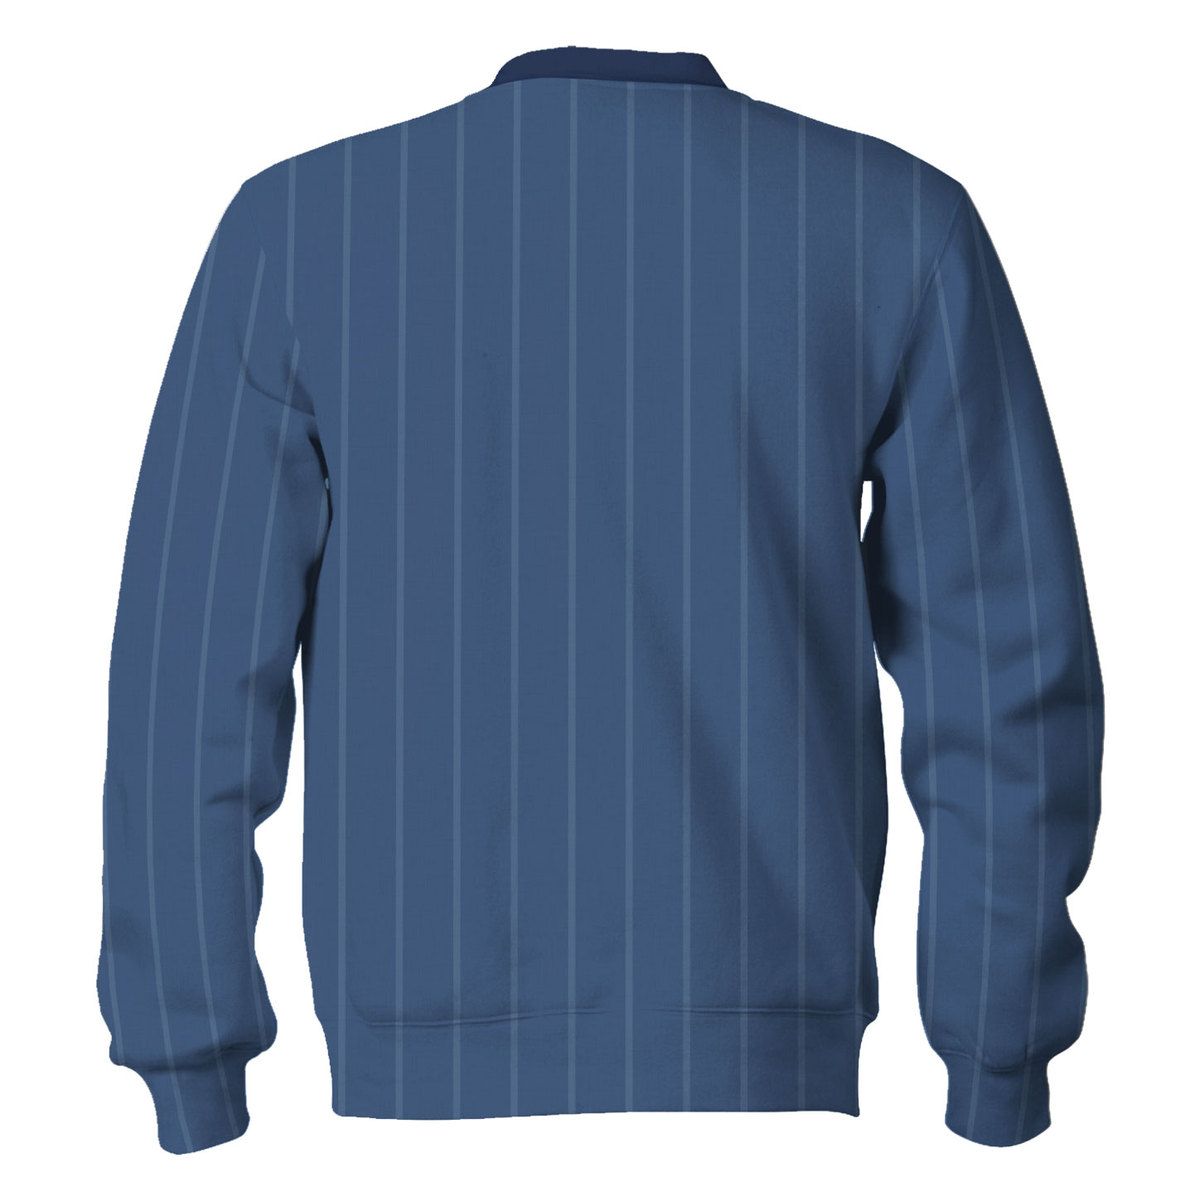 Spy Blue Team TF2 sweatshirt